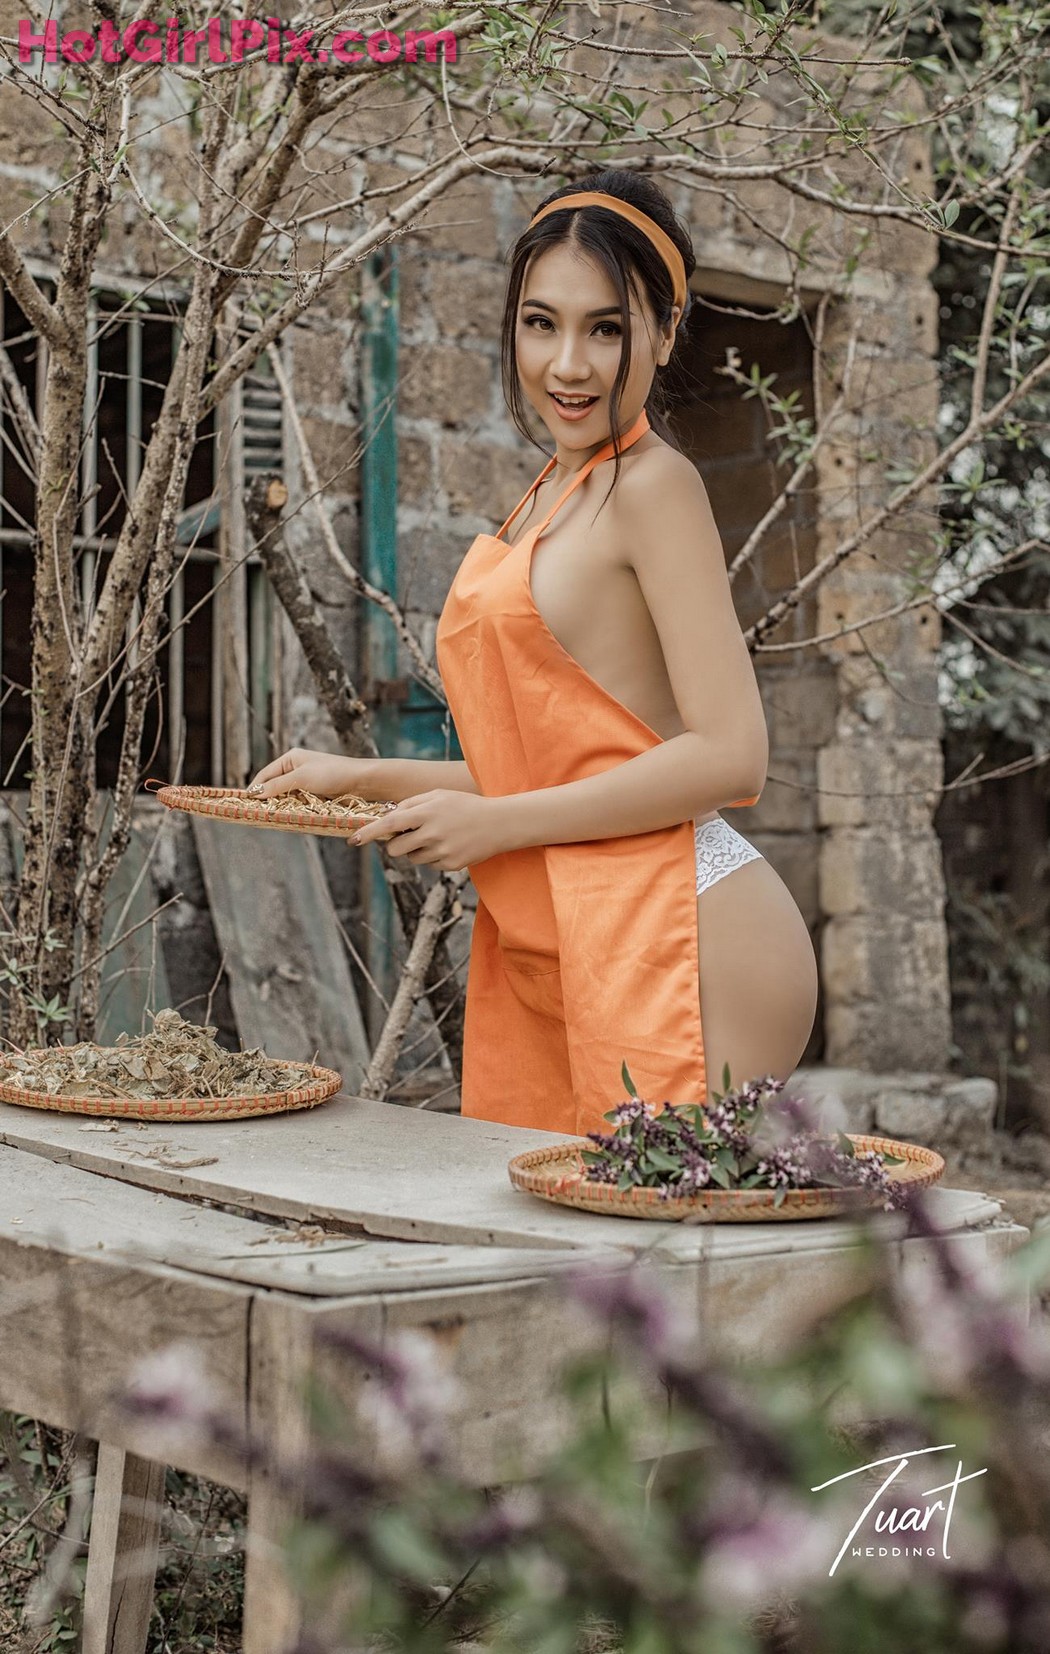 "Tuyệt Tình Cốc" - Hot Vietnamese art photo album